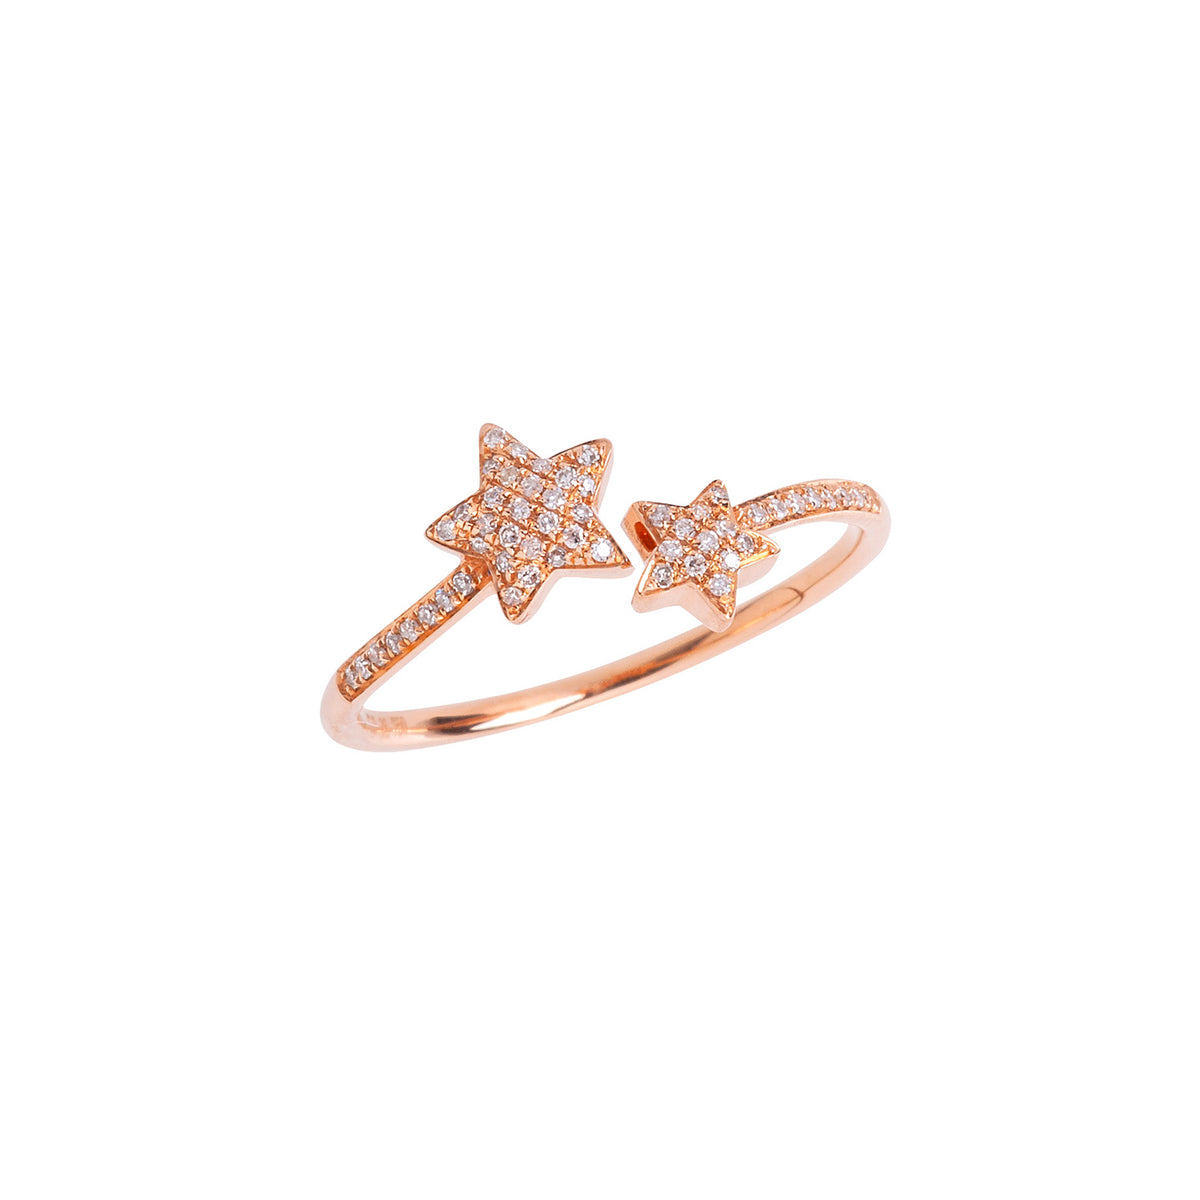 Diamond Star Ring. Rose gold ring. Double star ring. Δαχτυλίδι με αστέρια. Δαχτυλίδι με μπριγιάν.